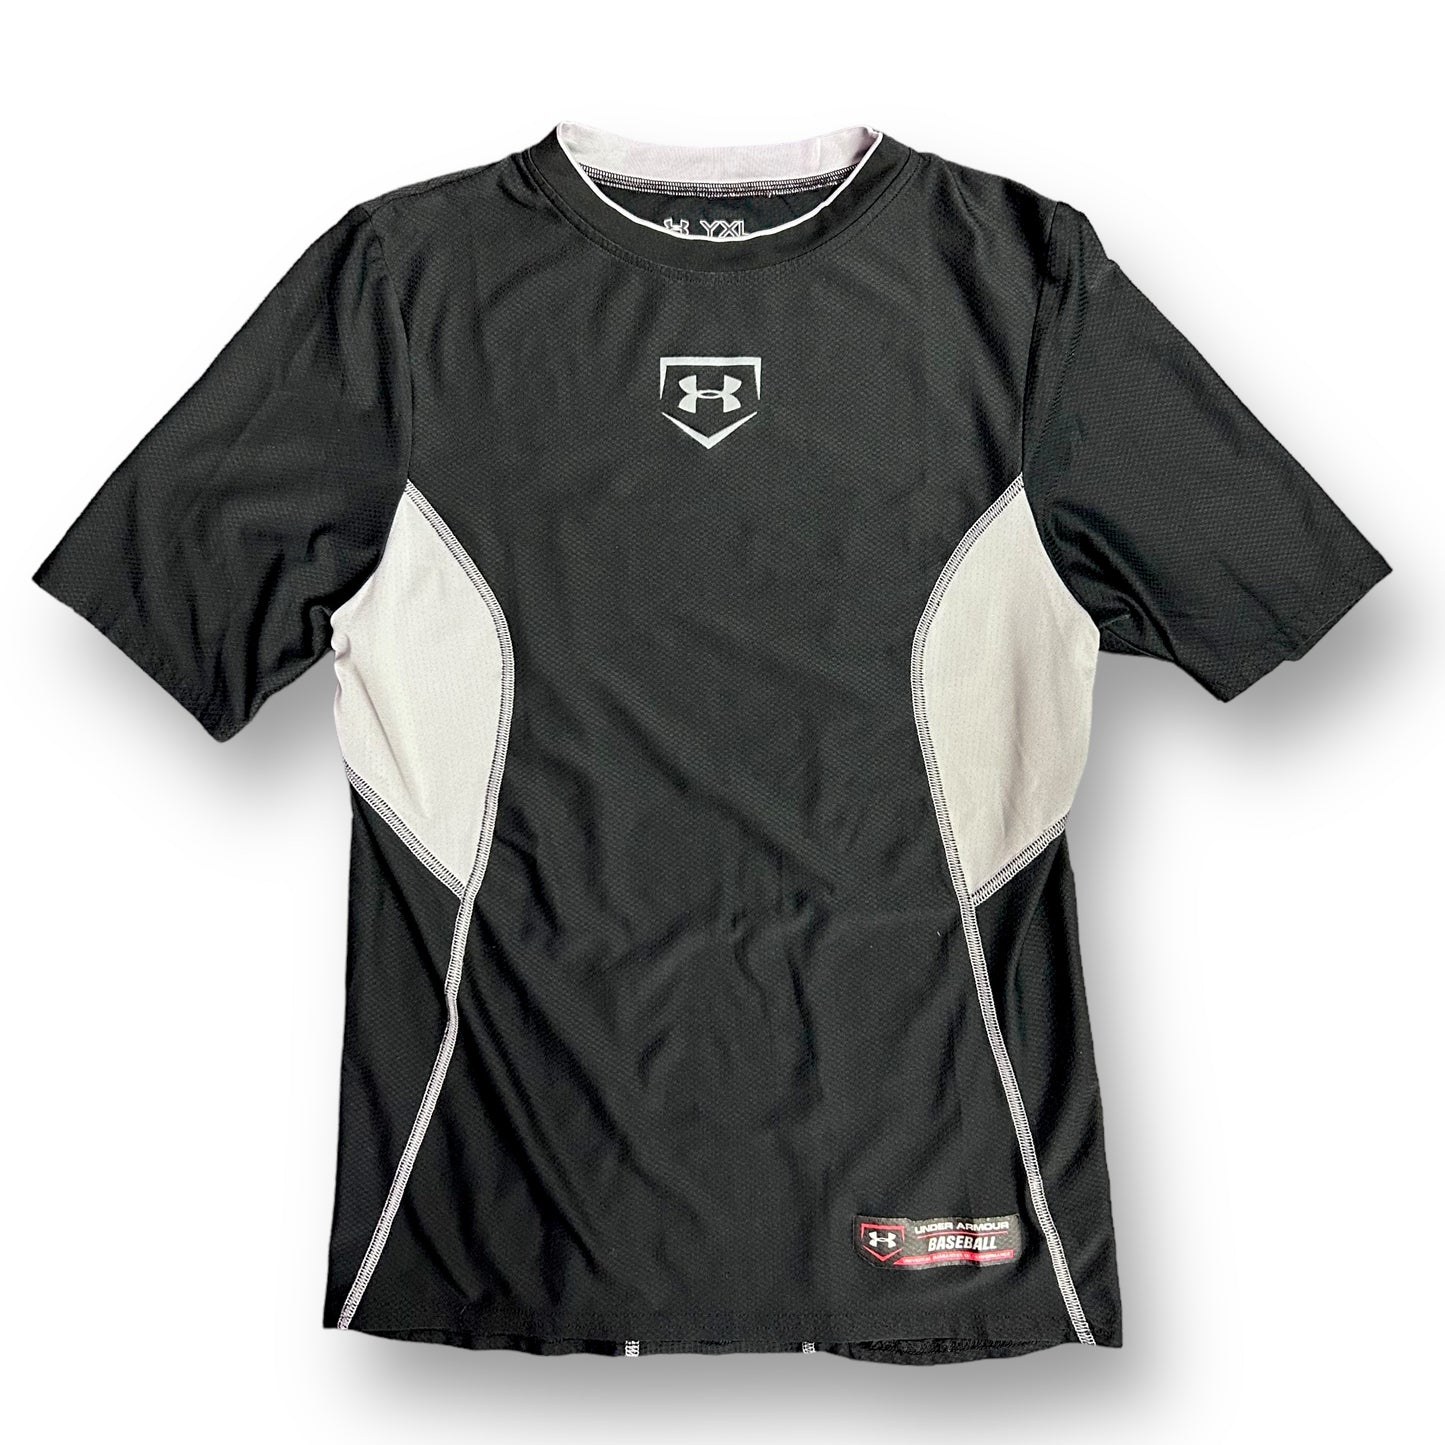 Boys Under Armour Size YXL 14/16 Black Fitted Heat Gear Athletic Shirt